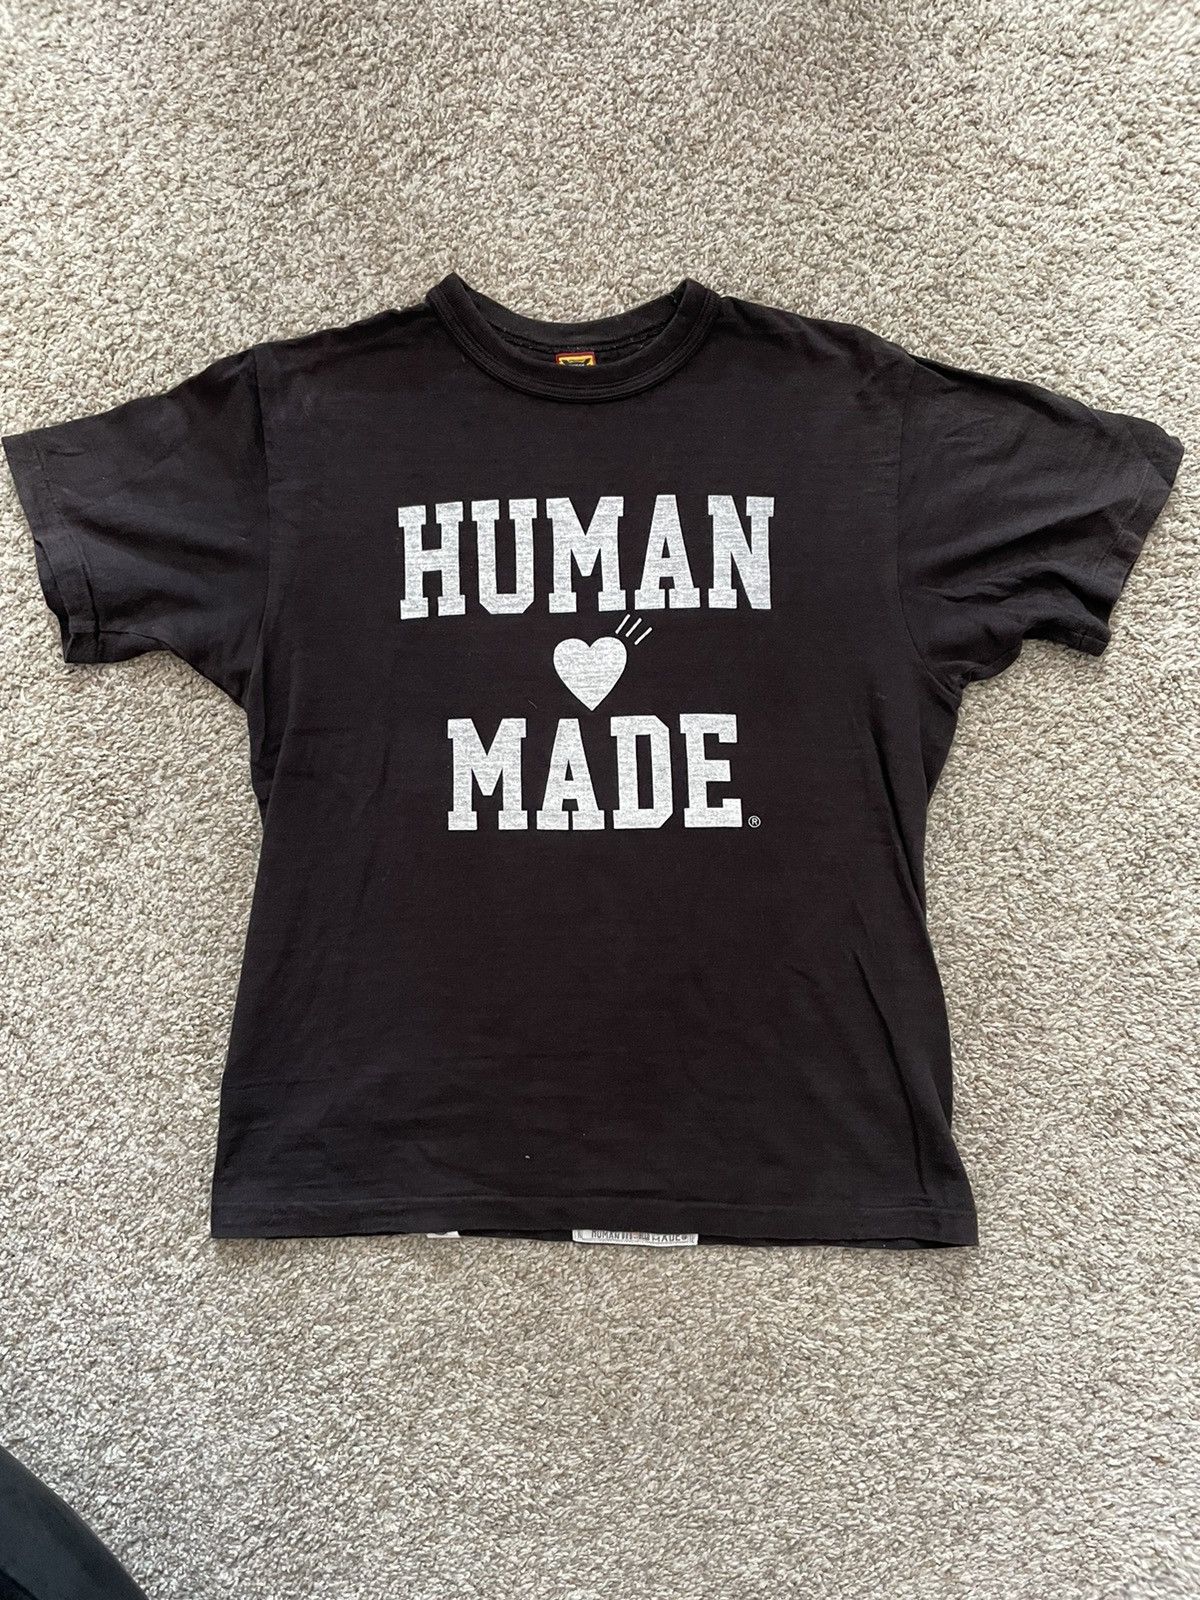 Human Made Human Made Heart Tee Shirt Size US M / EU 48-50 / 2 - 1 Preview